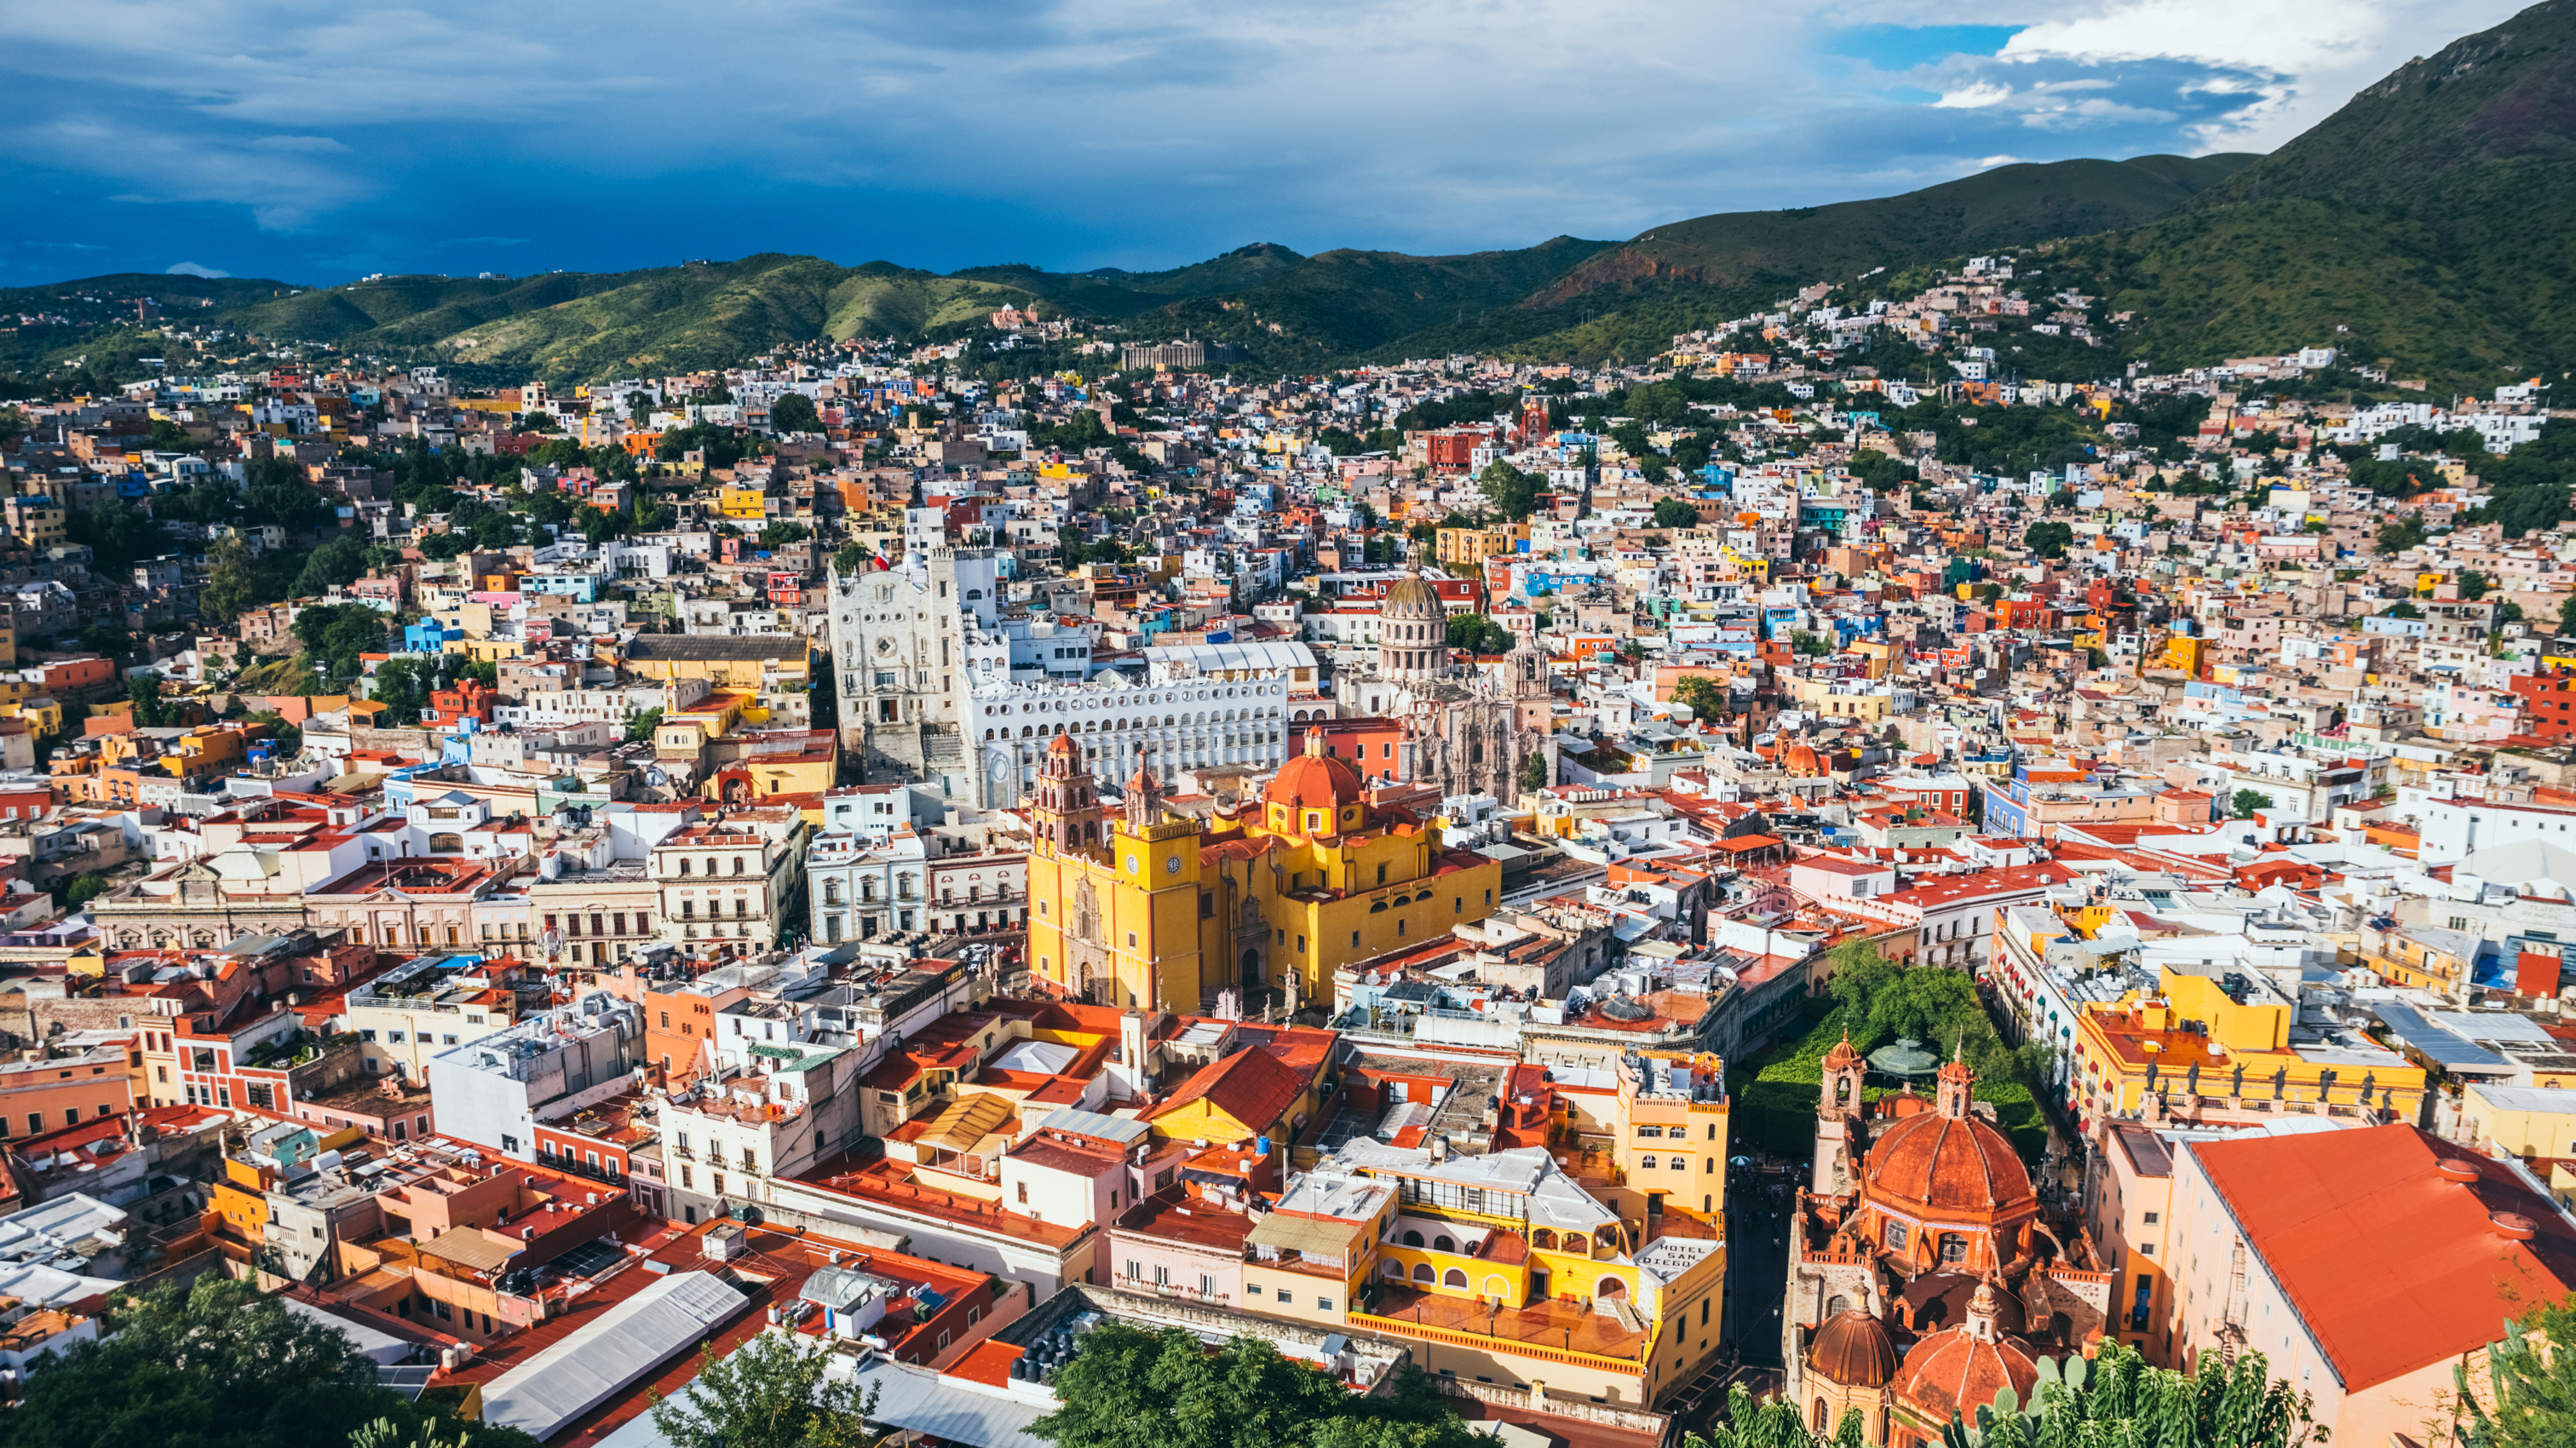 Top attractions in Guanajuato, Mexico (photos) | CNN Travel